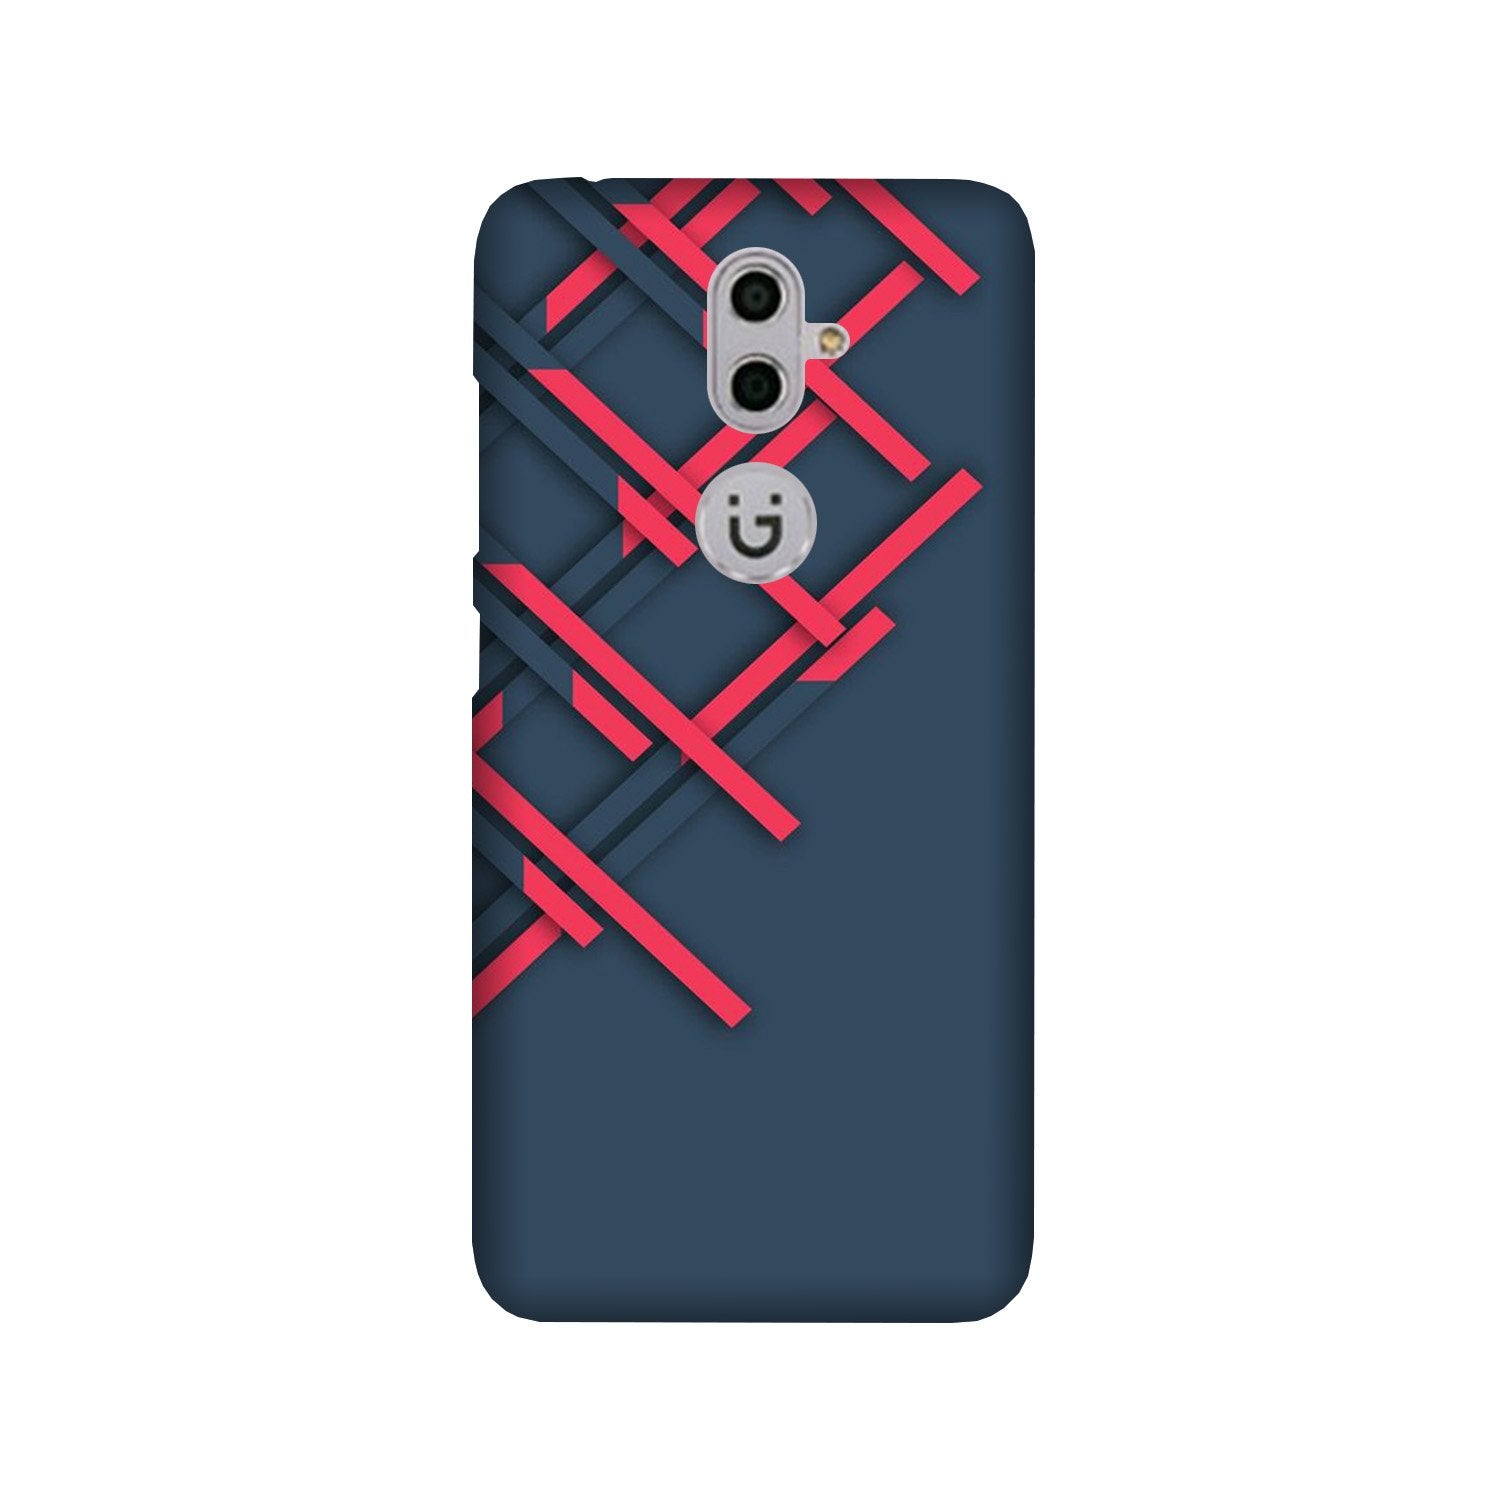 Designer Case for Gionee S9 (Design No. 285)